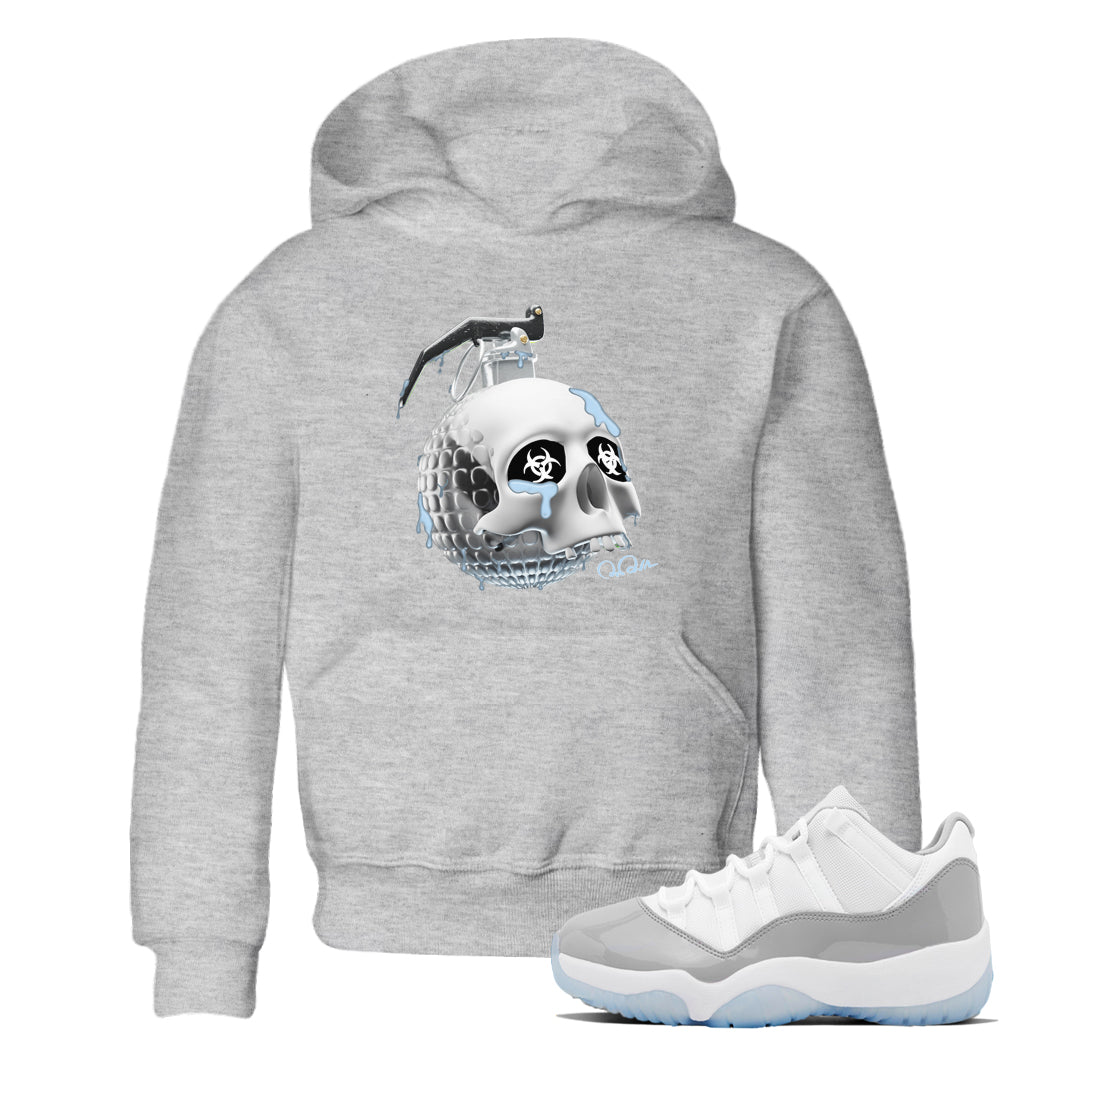 Air Jordan 11 White Cement Sneaker Tees Drip Gear Zone Skull Bomb Sneaker Tees Air Jordan 11 Cement Grey Shirt Kids Shirts Heather Grey 1